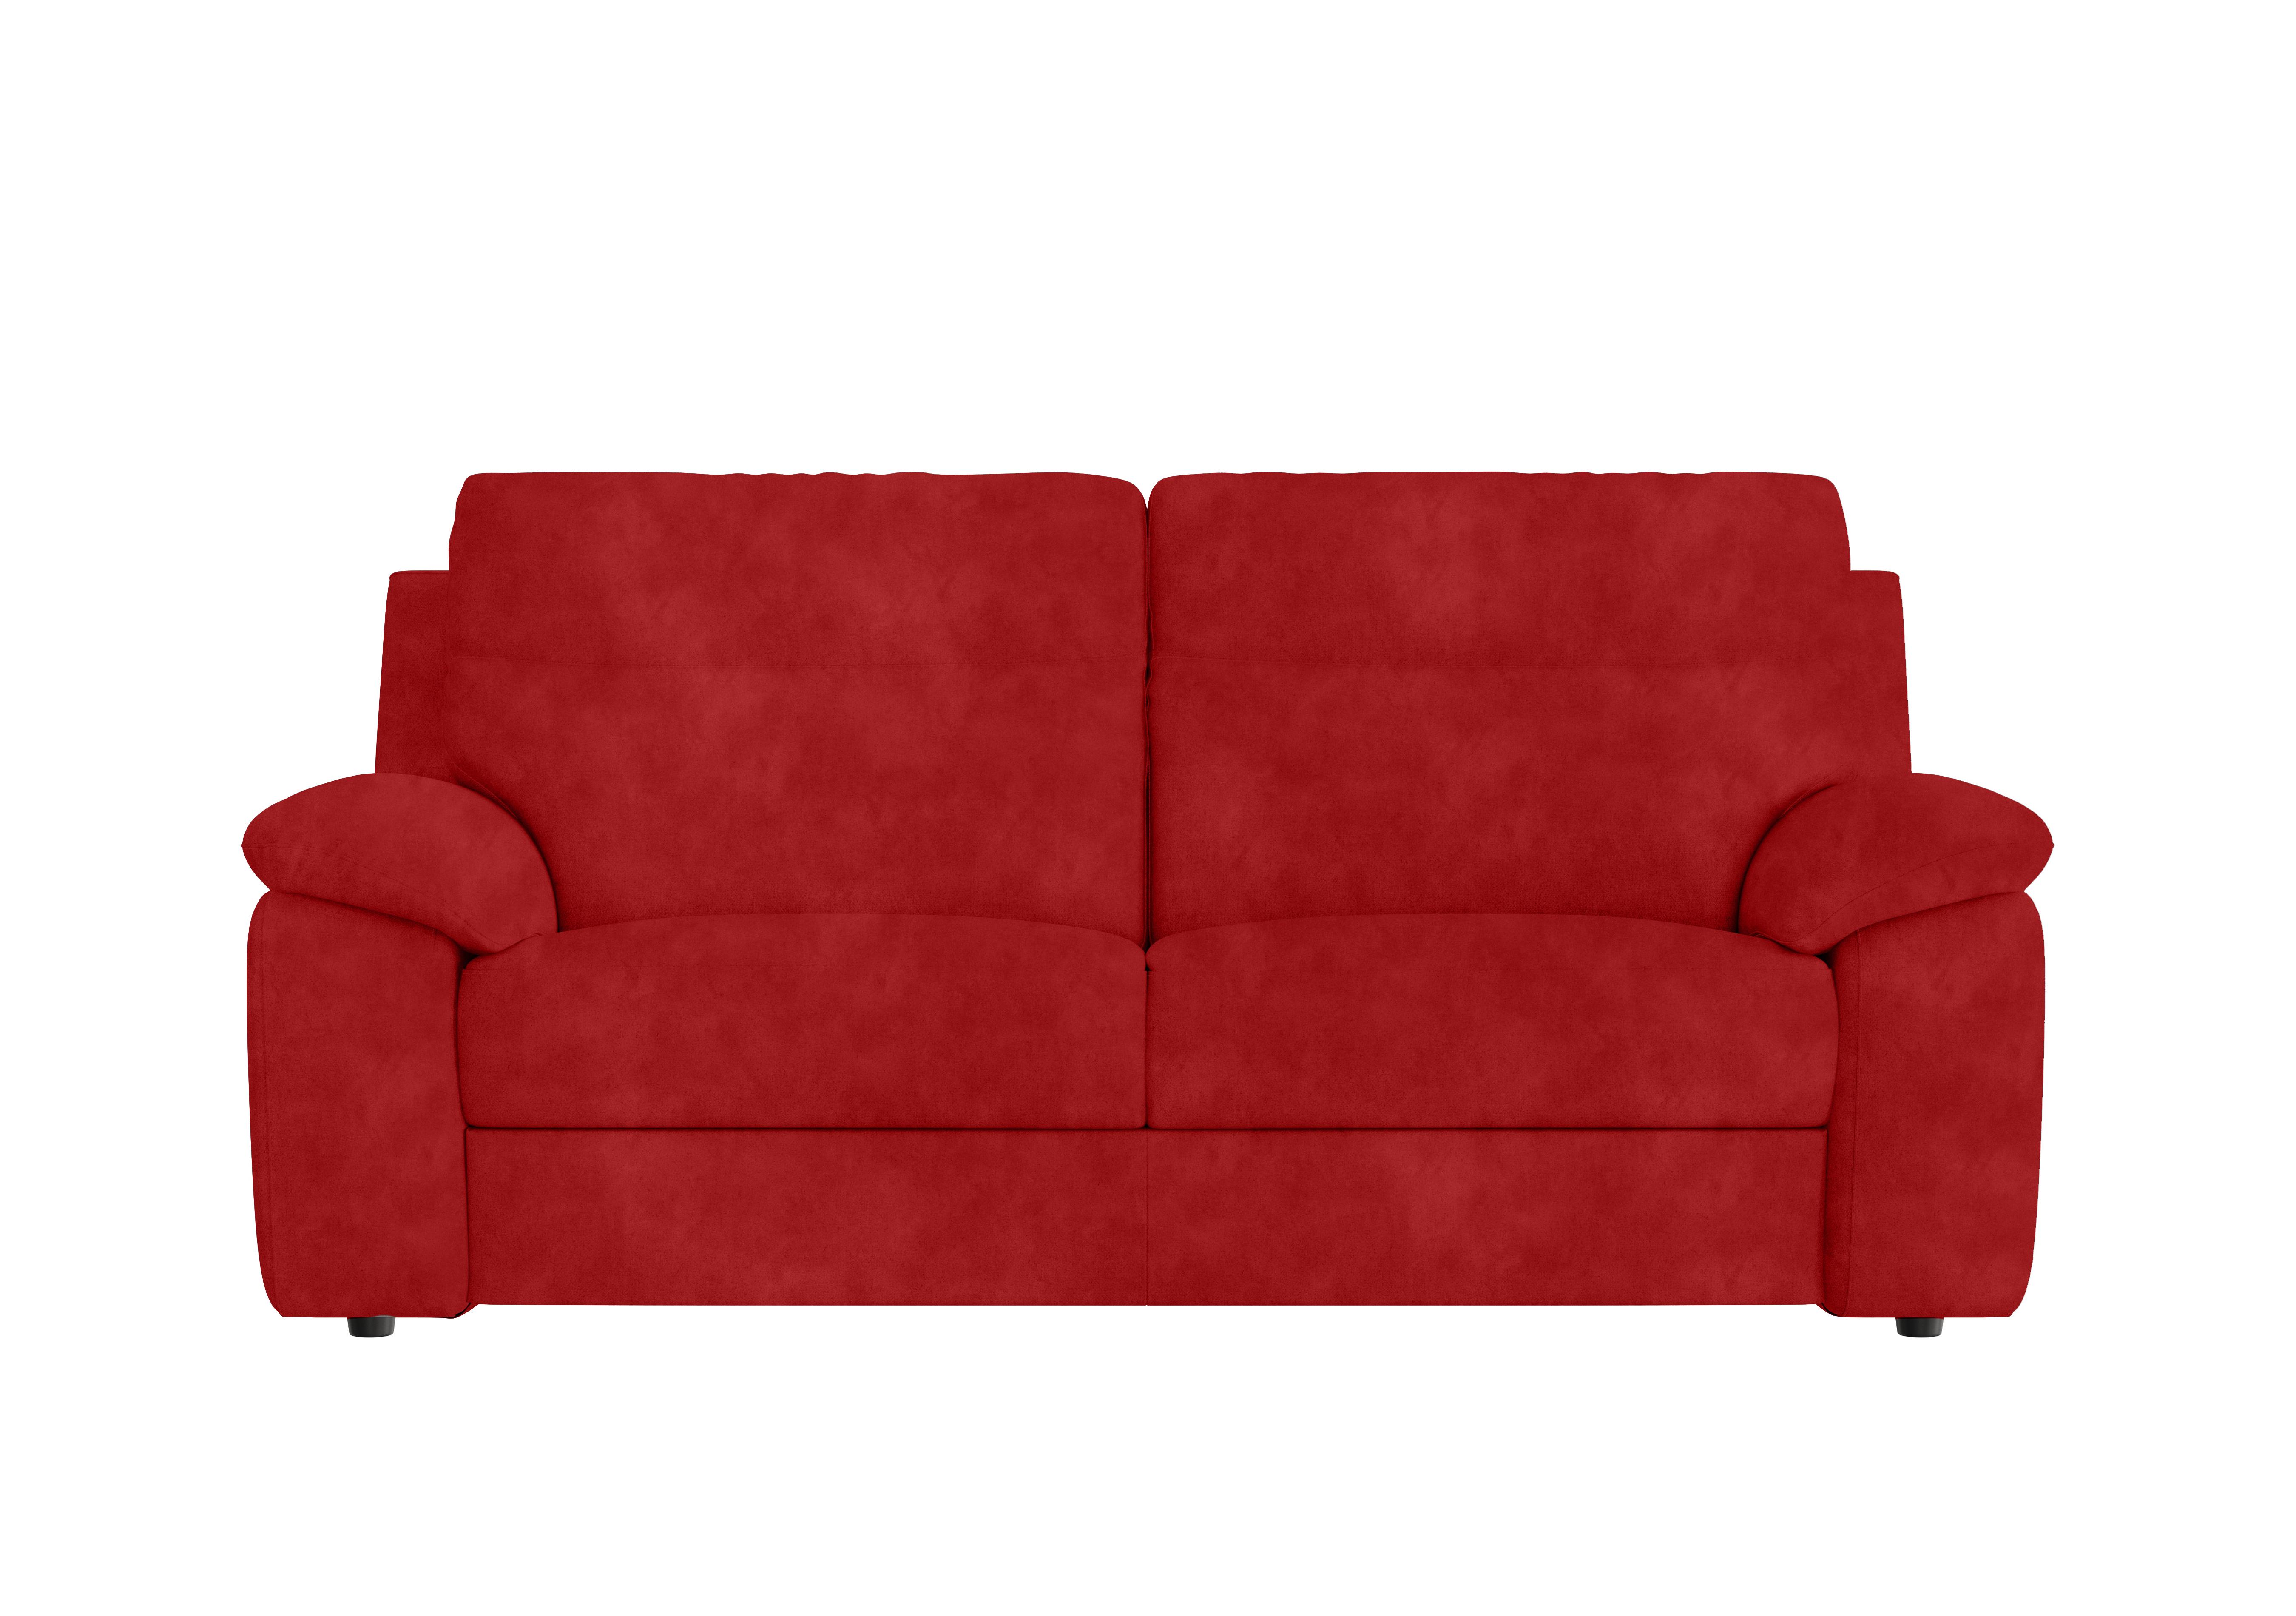 Pepino 3 Seater Fabric Sofa in Selma Rosso on Furniture Village